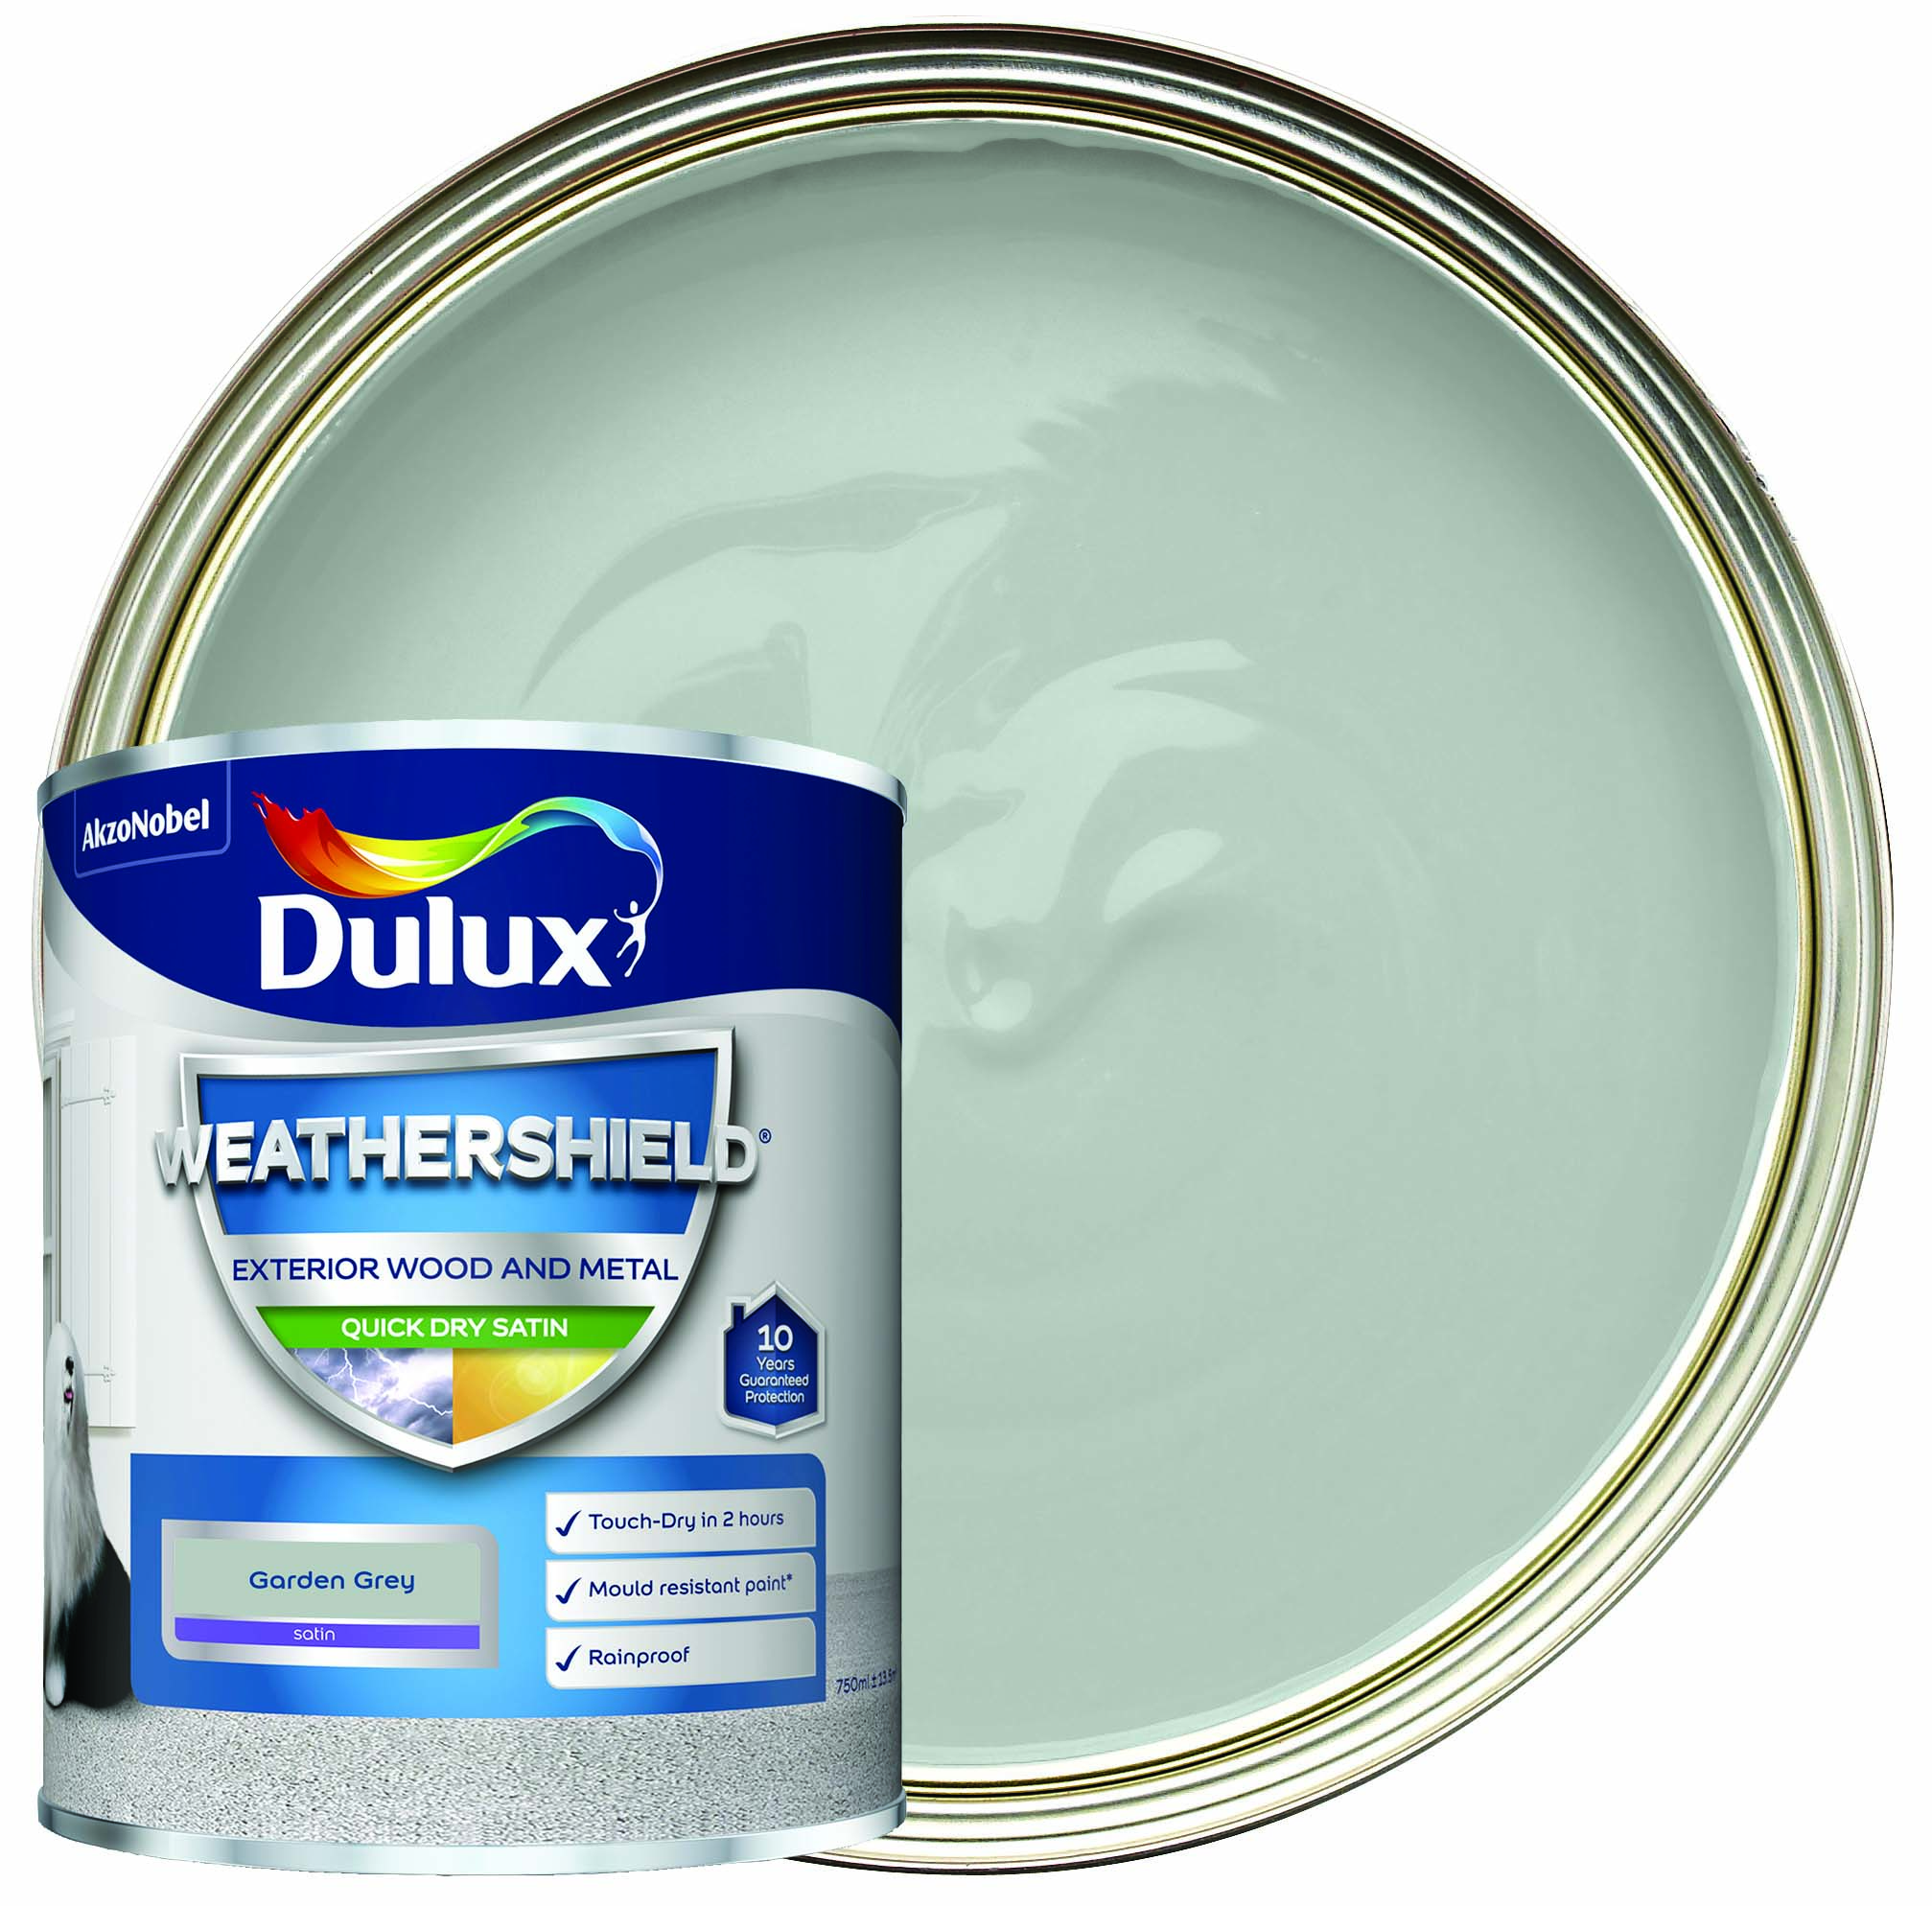 Image of Dulux Weathershield Quick Dry Satin Paint - Garden Grey - 750ml